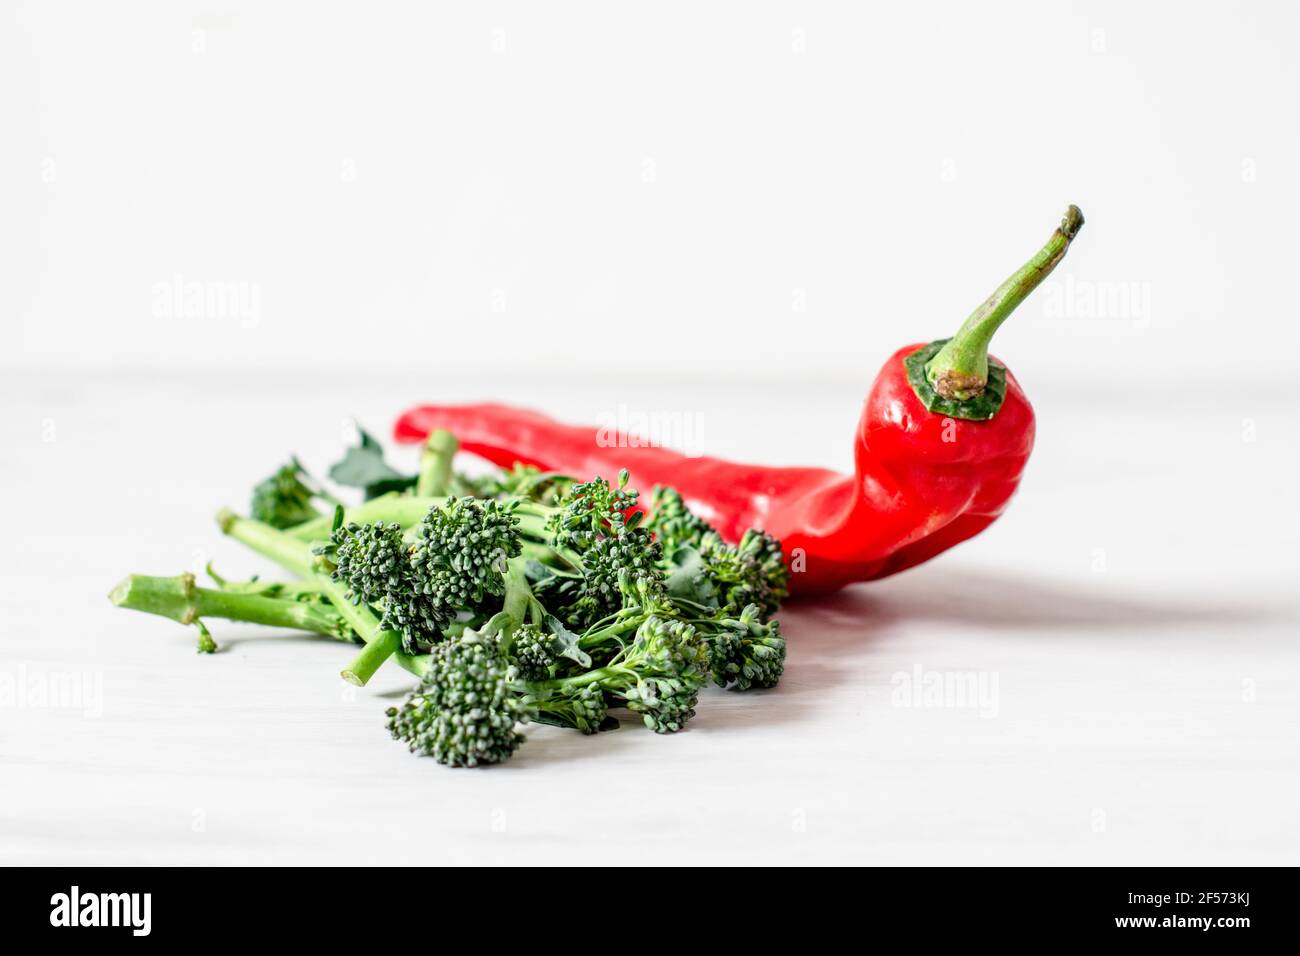 An Organic Red Romano Pepper with organic Tenderstem broccoli spears minimalist setting Stock Photo